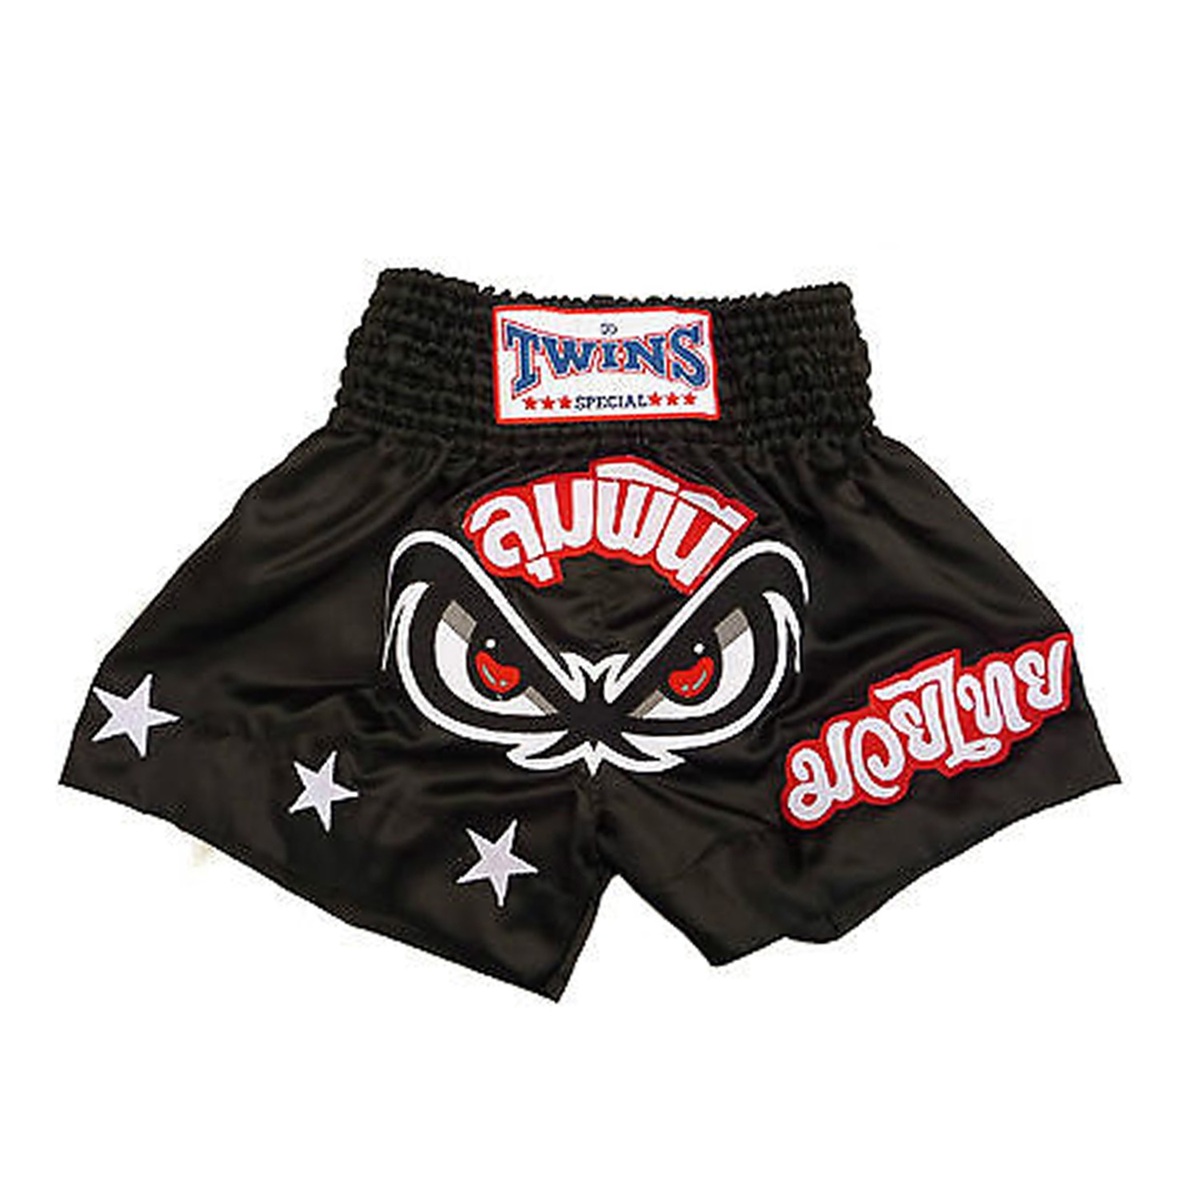 Boxing Pants Trunks Shorts Adult TWINS Kick Boxing Muay Thai No Fear ...